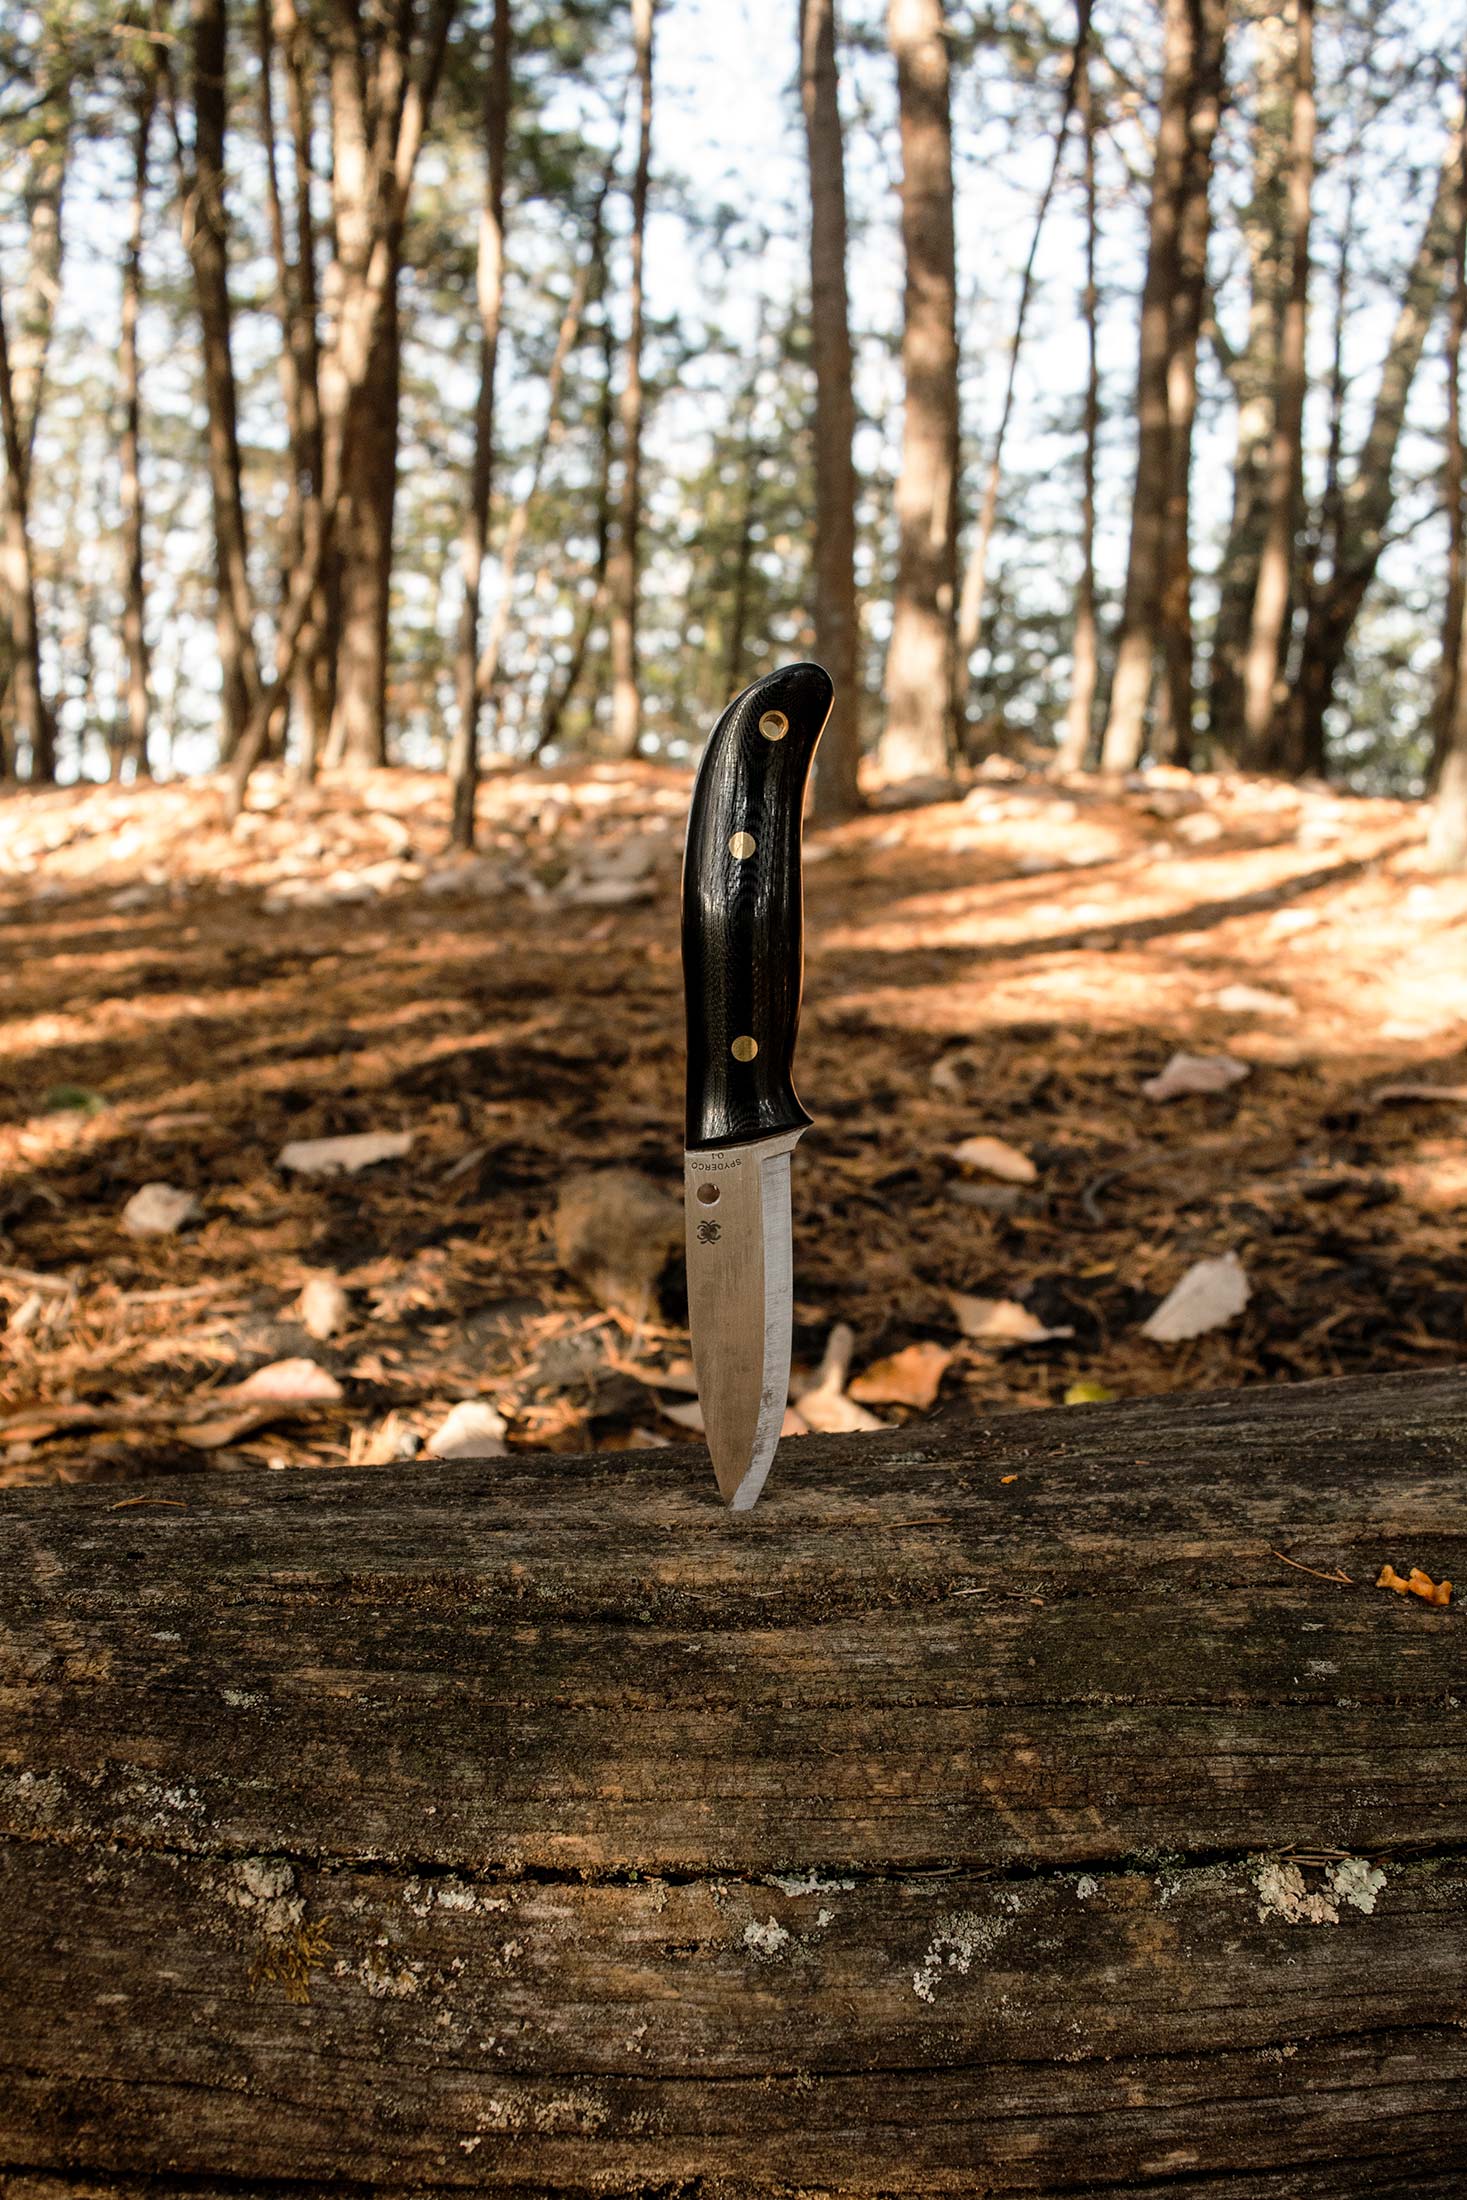 Spyderco Bushcraft Knife Review